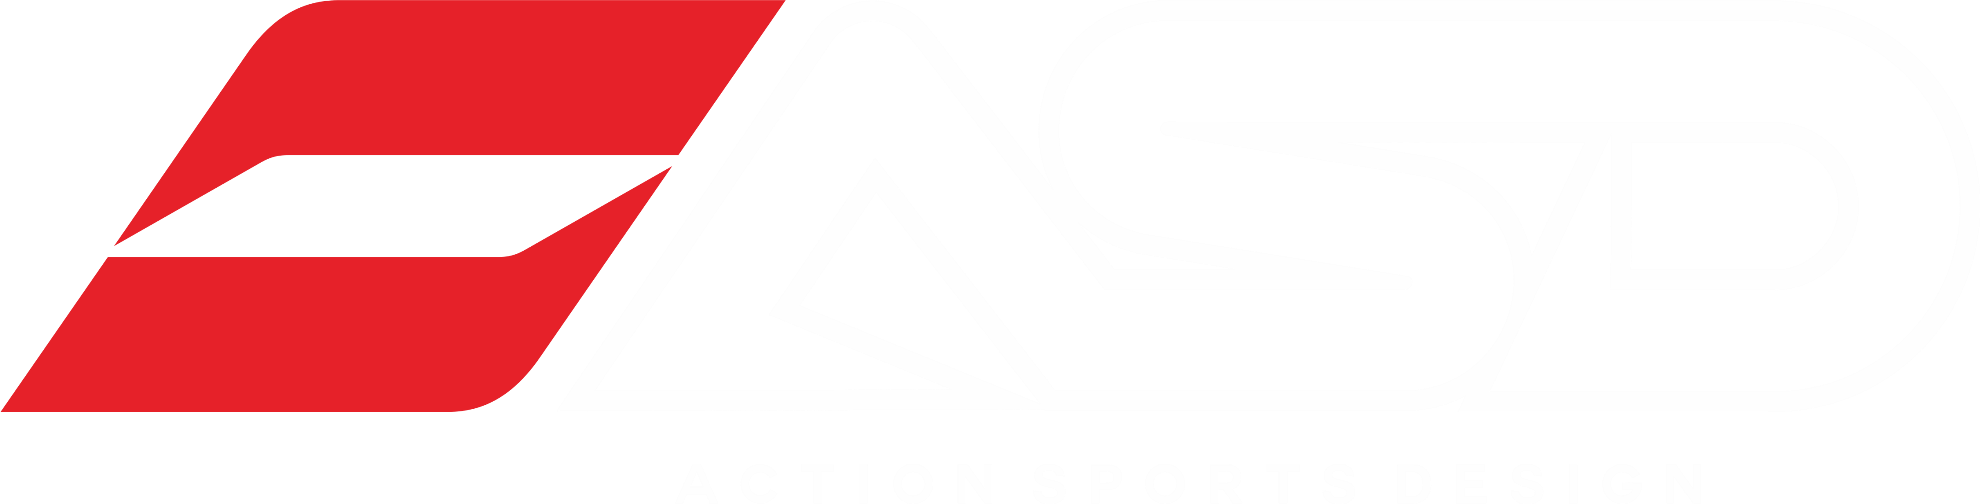 Action Sport Design